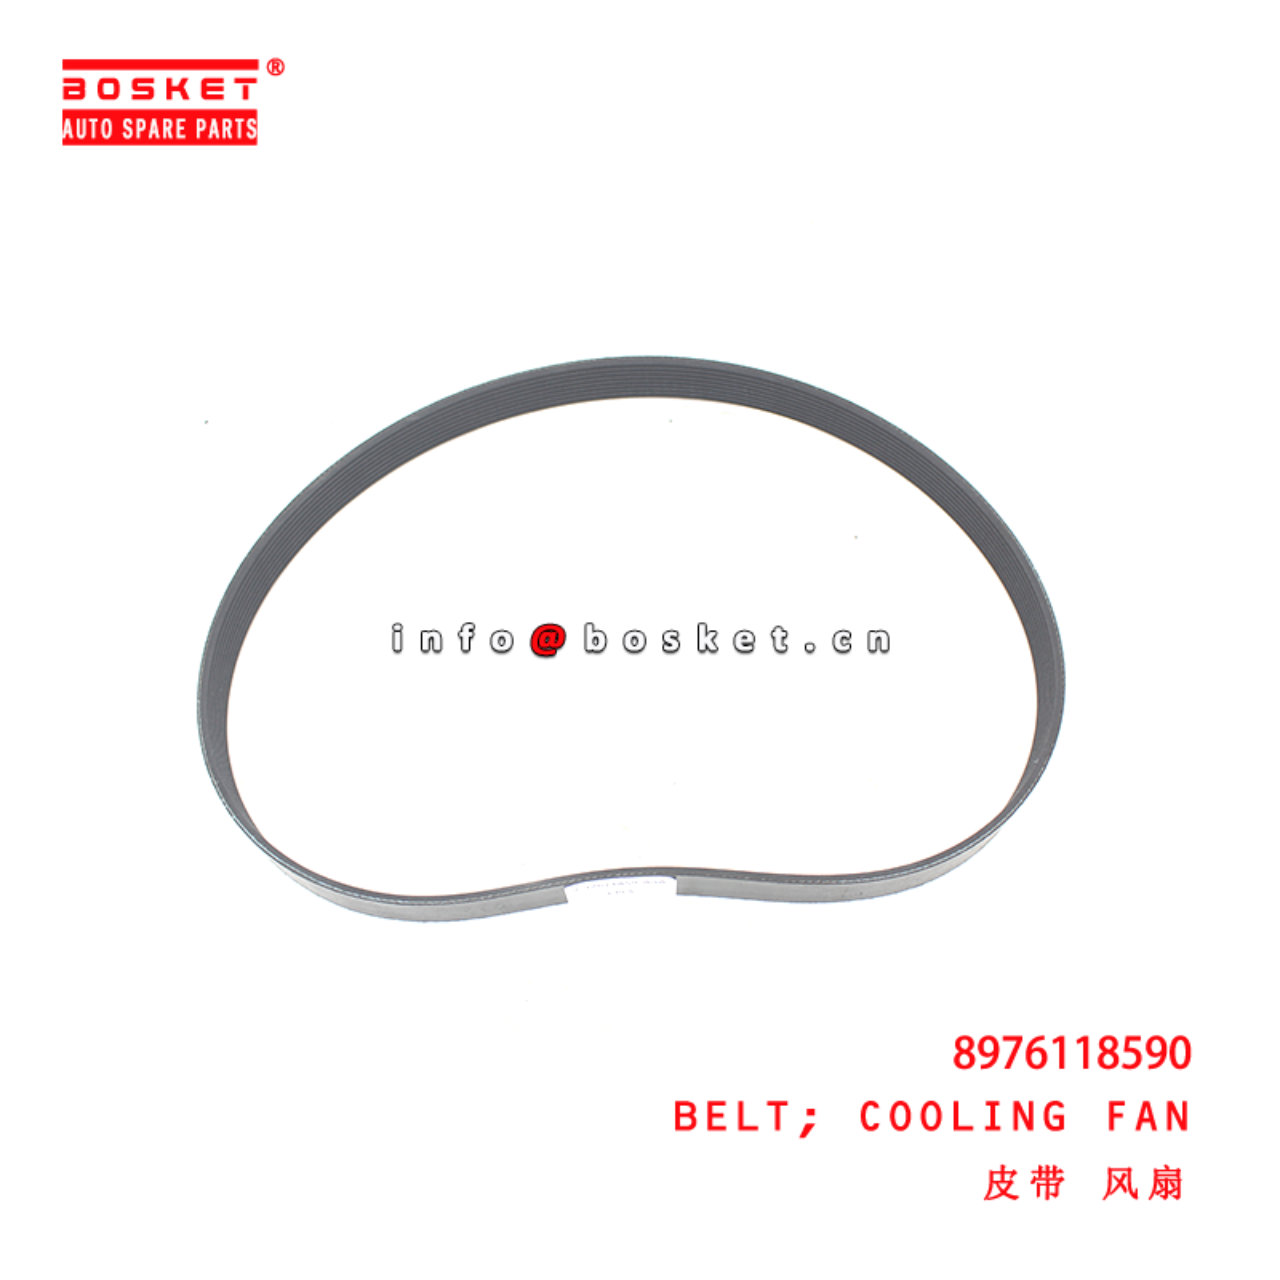 8-97611859-0 Cooling Fan Belt suitable for ISUZU FVR34 FC 6HK1 8976118590